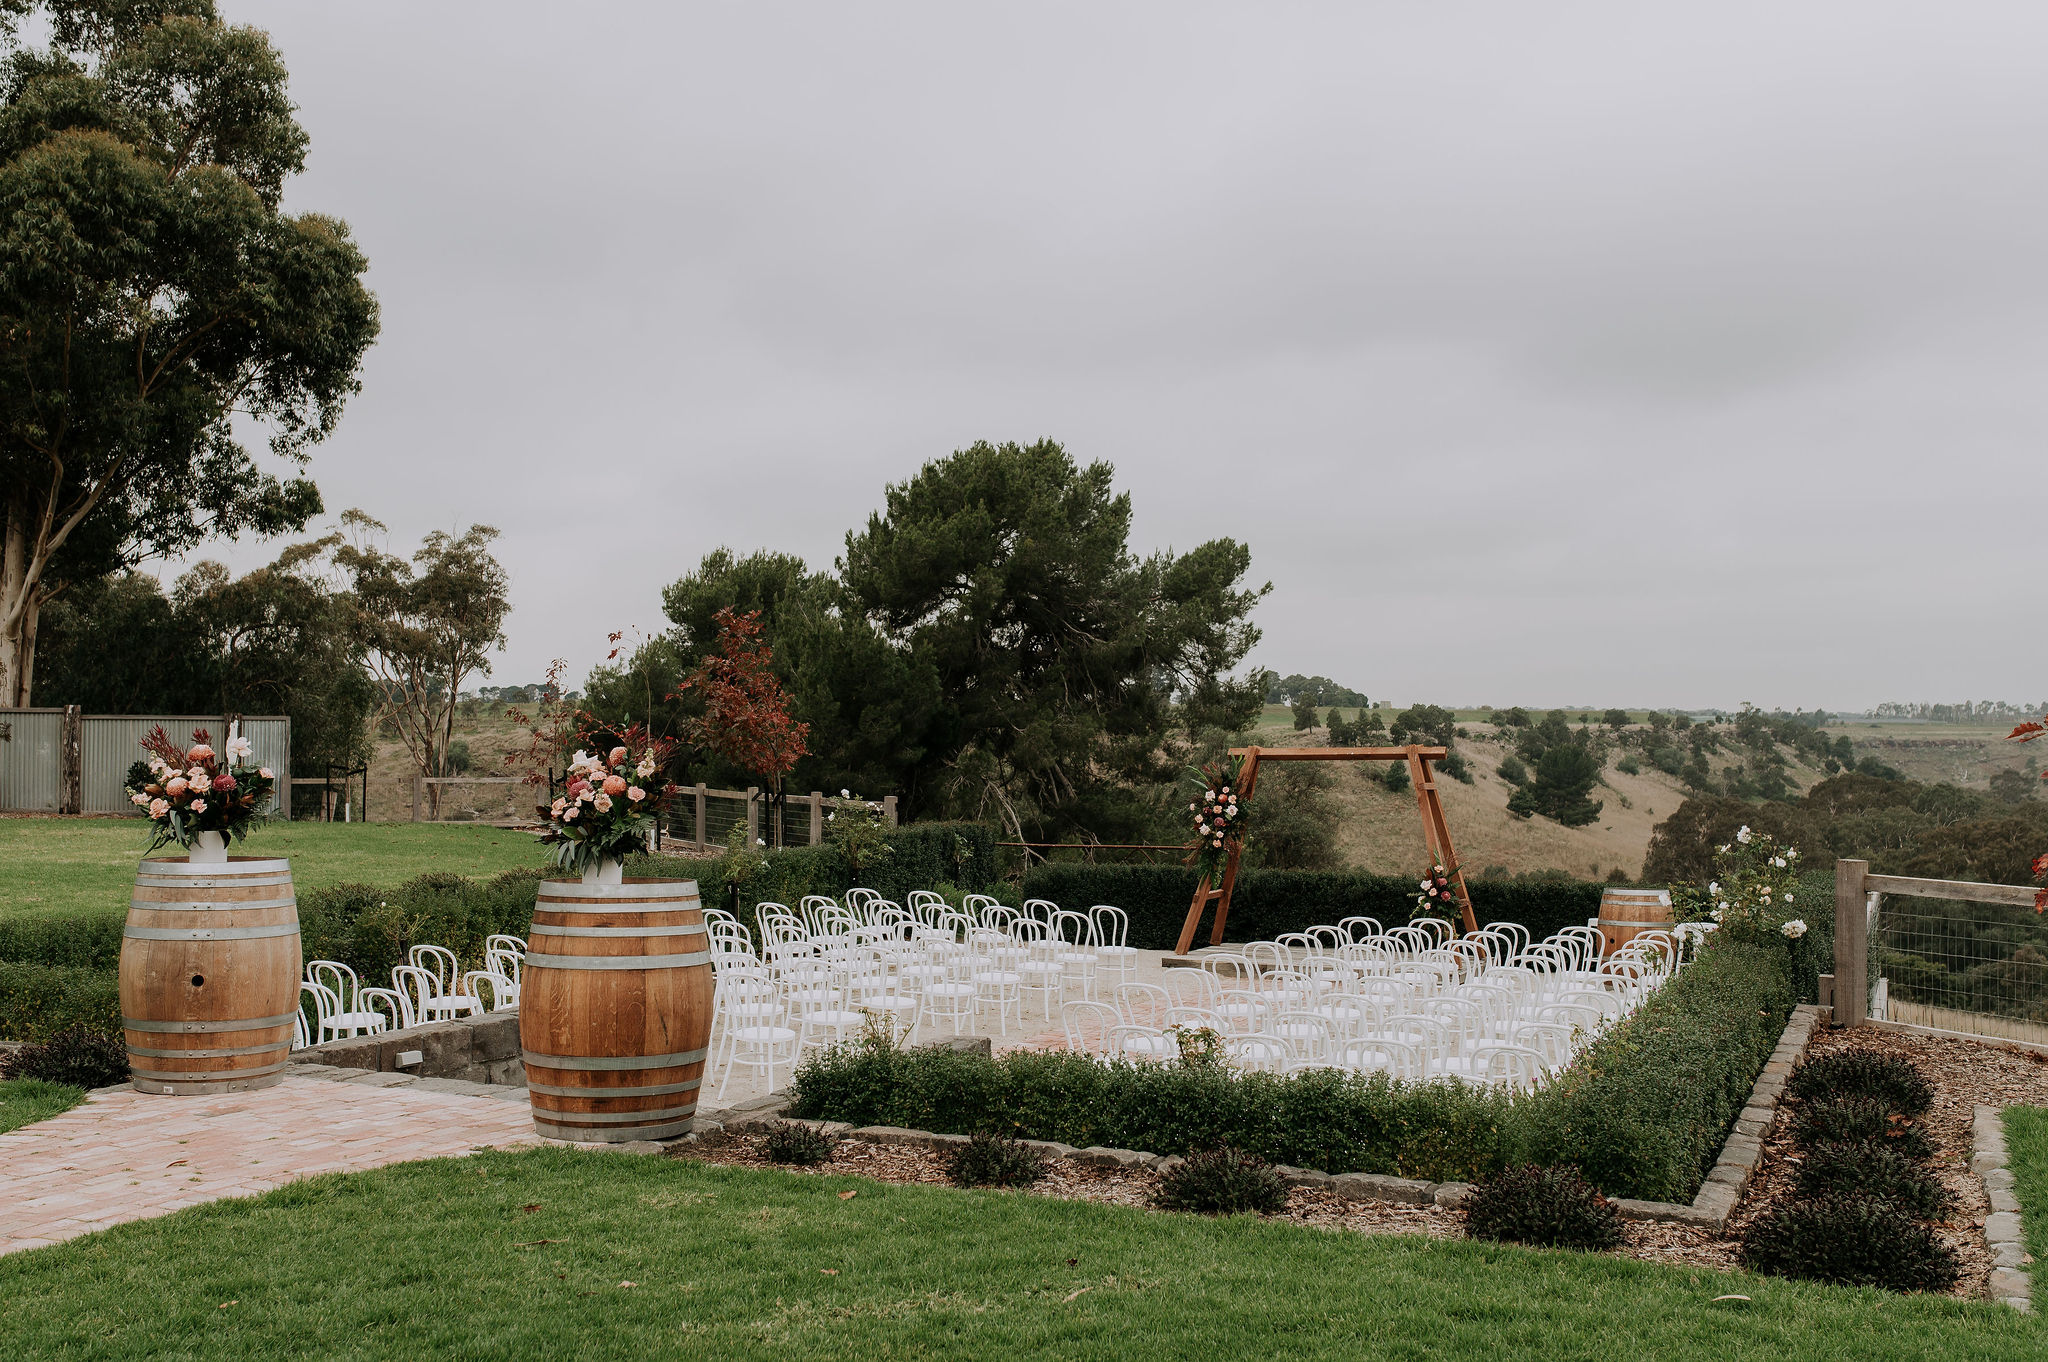 Outdoor wedding venue ideas you'll love